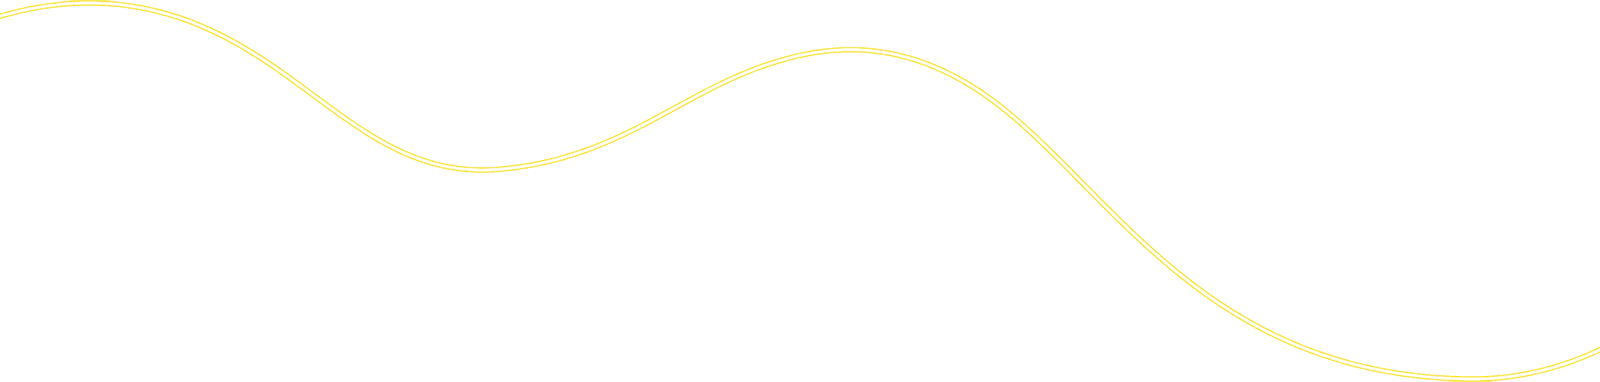 yellow double line